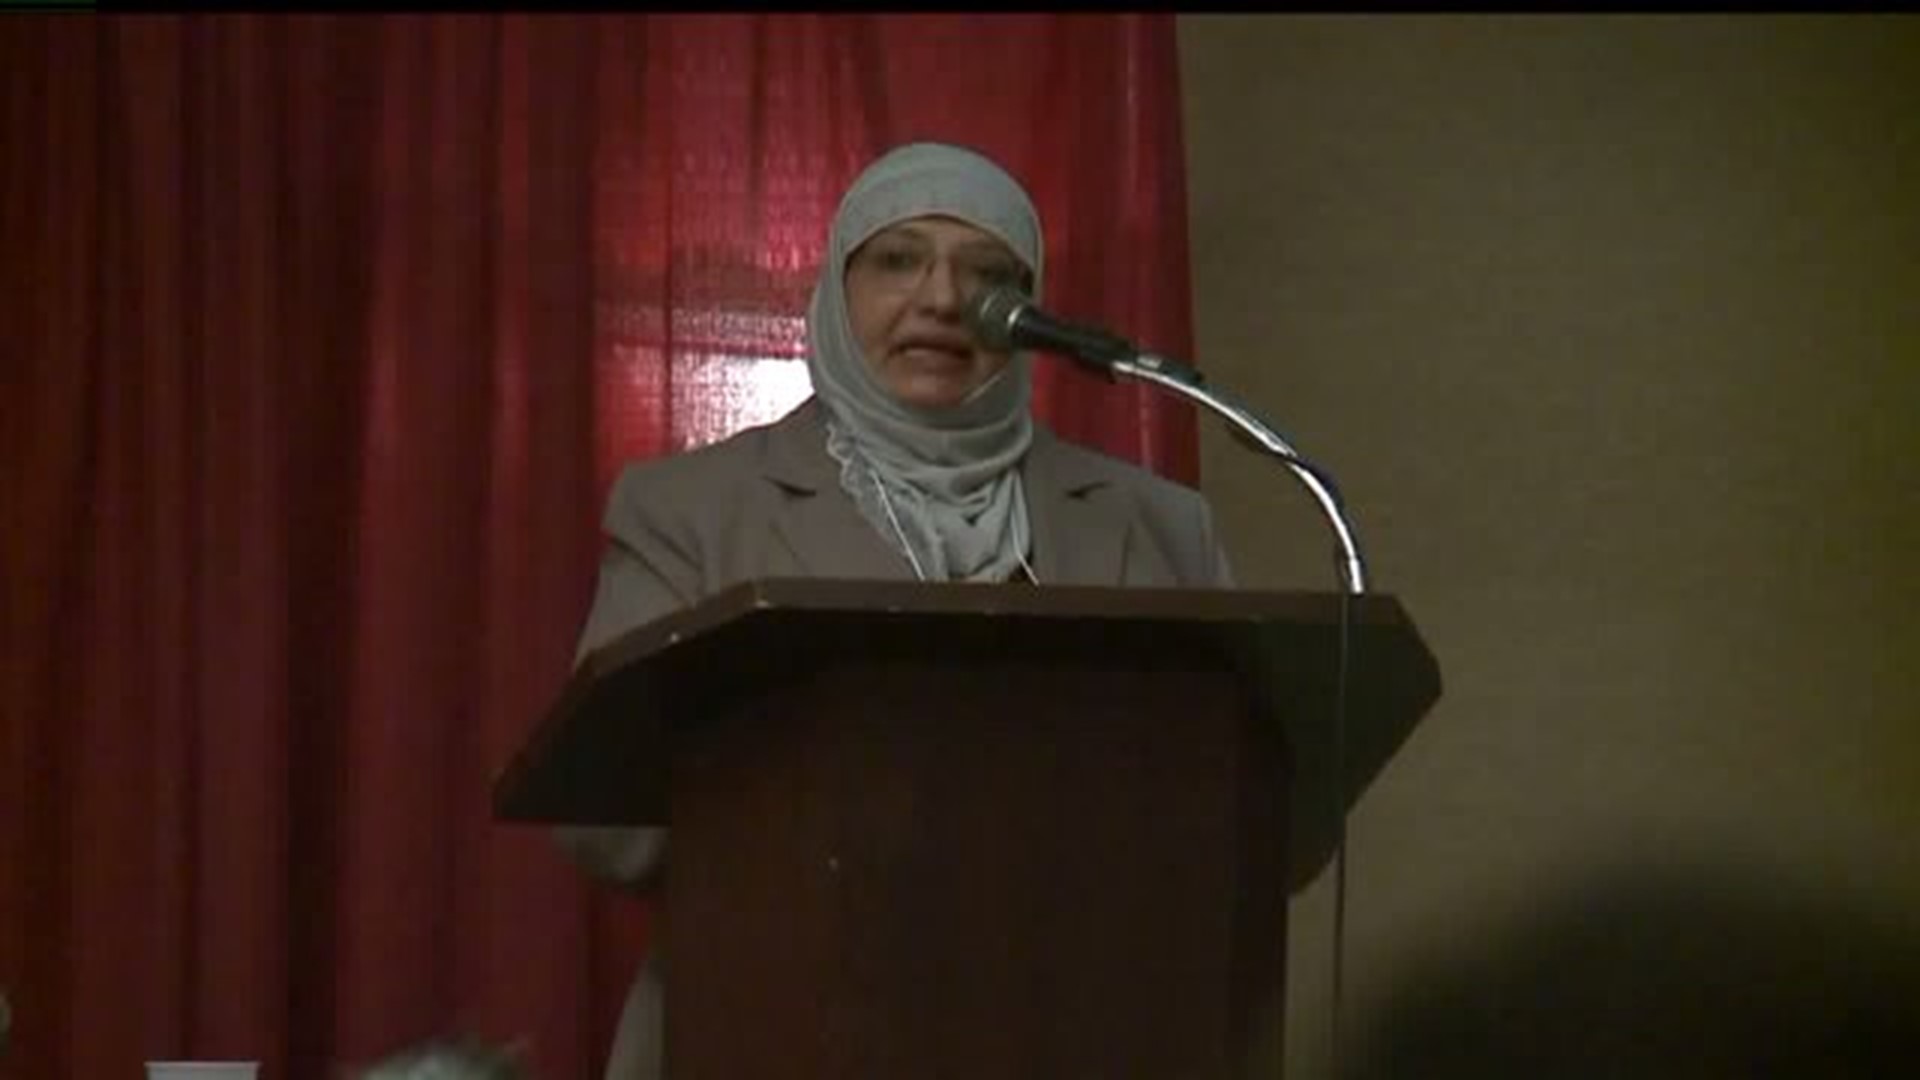 Muslim Community hosts `United Against Hate` forum